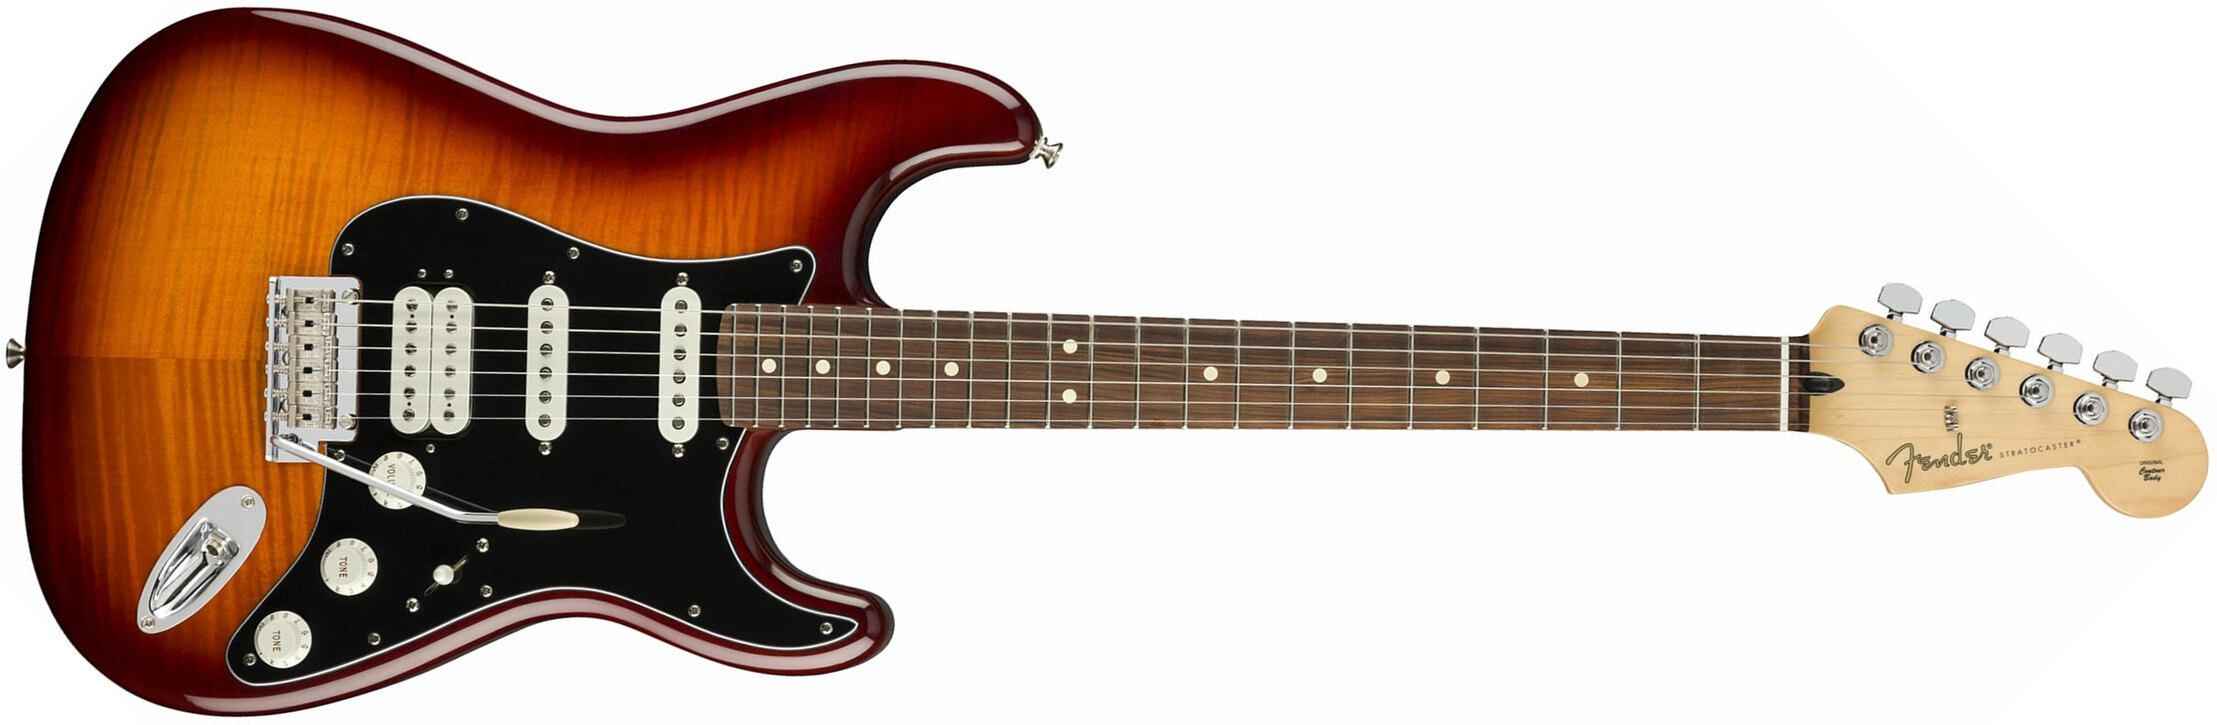 Fender Strat Player Plus Top Mex Hss Pf - Tobacco Burst - Guitarra eléctrica con forma de str. - Main picture